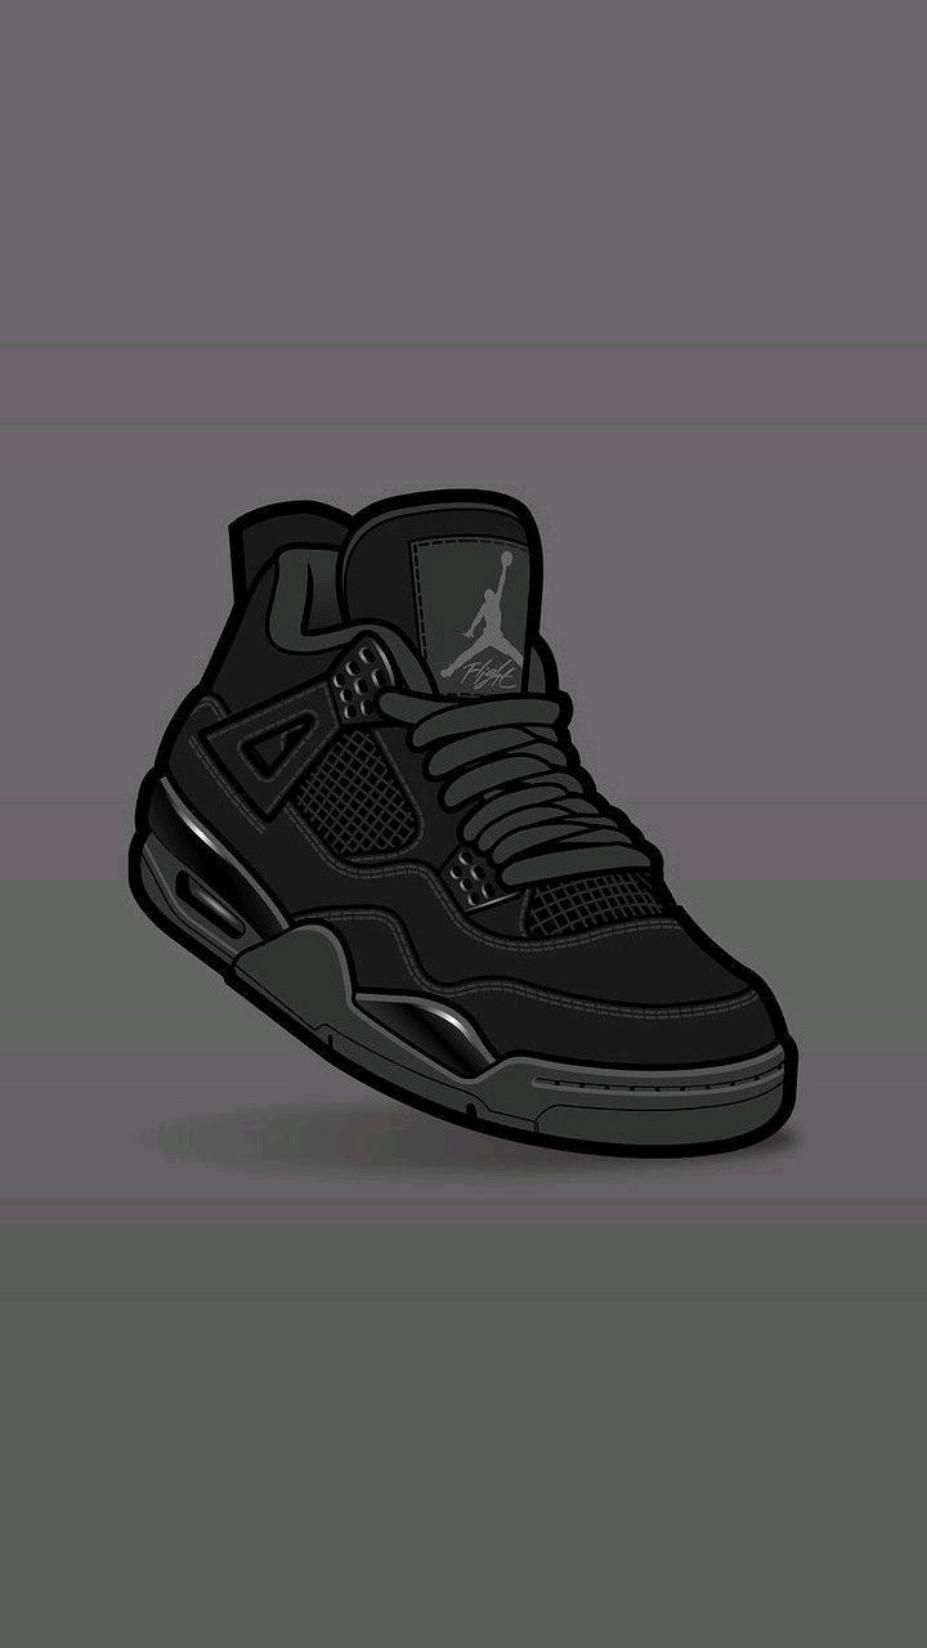 Jordan 4 black cat. Shoes wallpaper